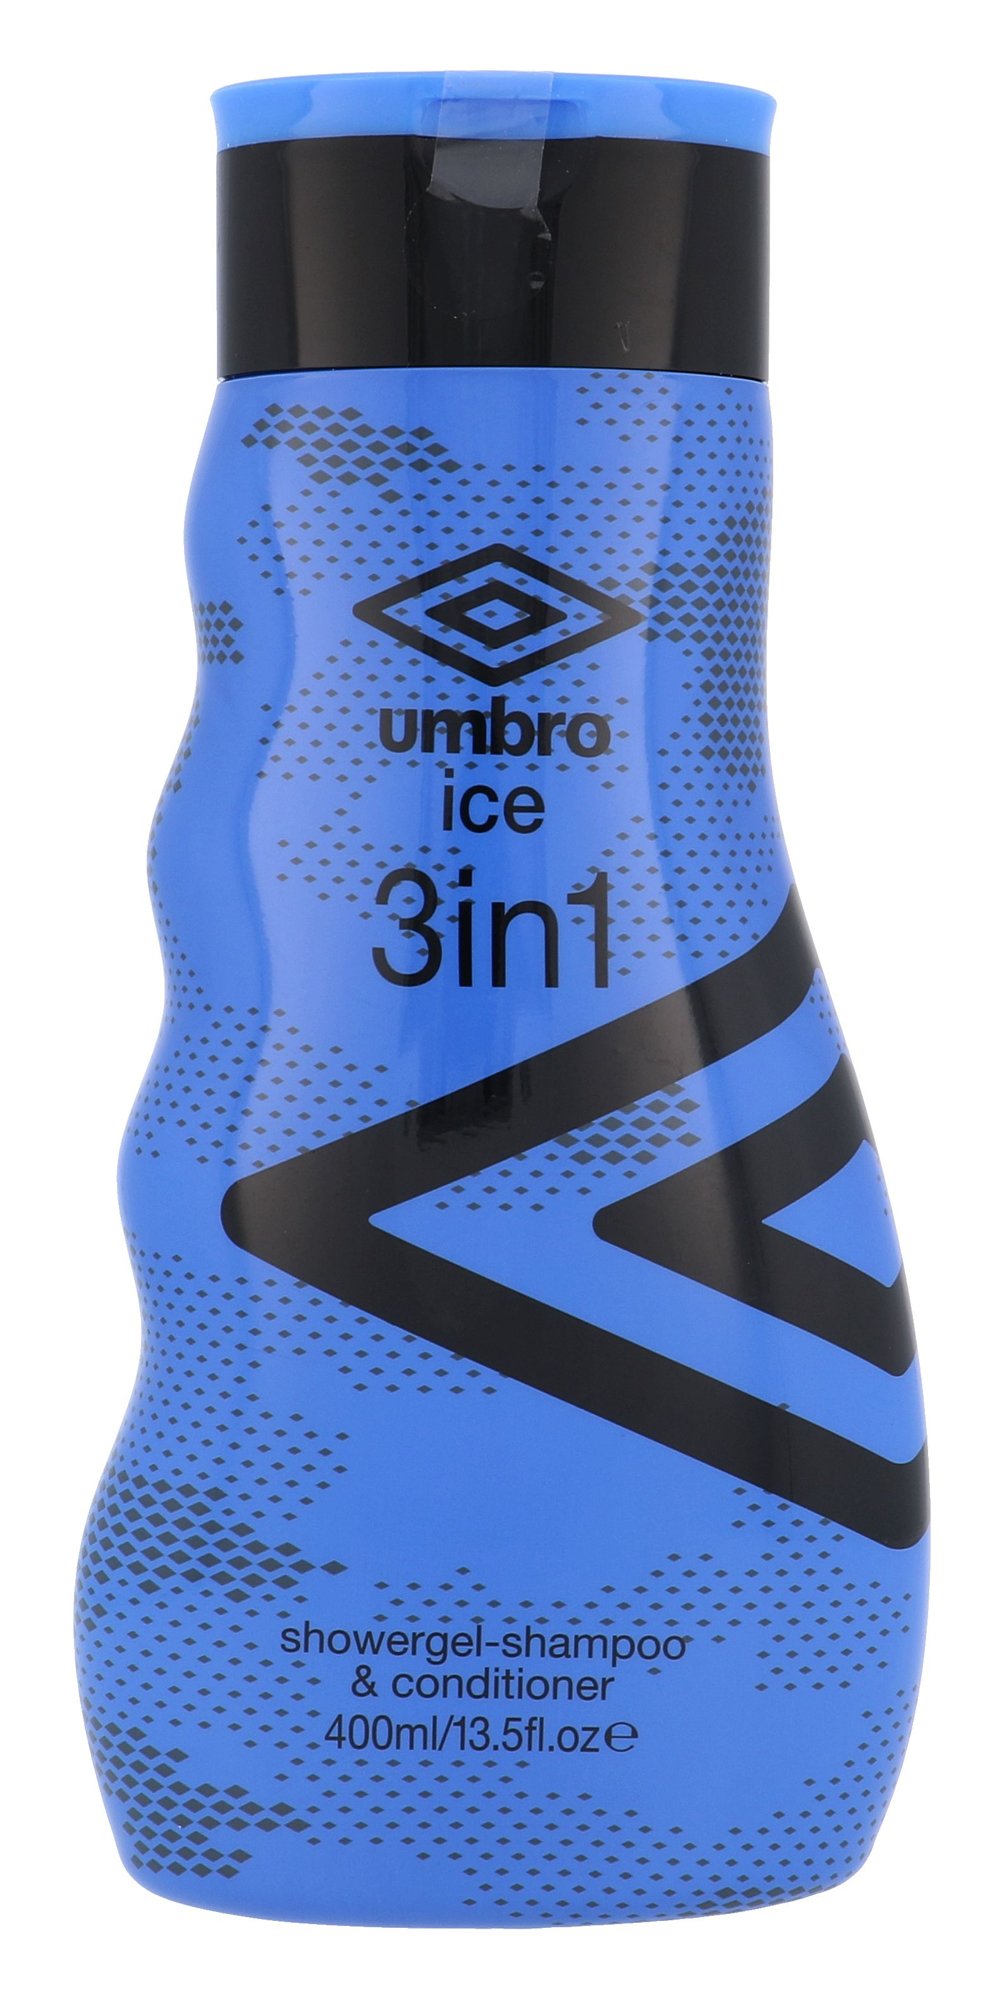 UMBRO Ice 3in1 Shower Gel-Shampoo & Conditioner